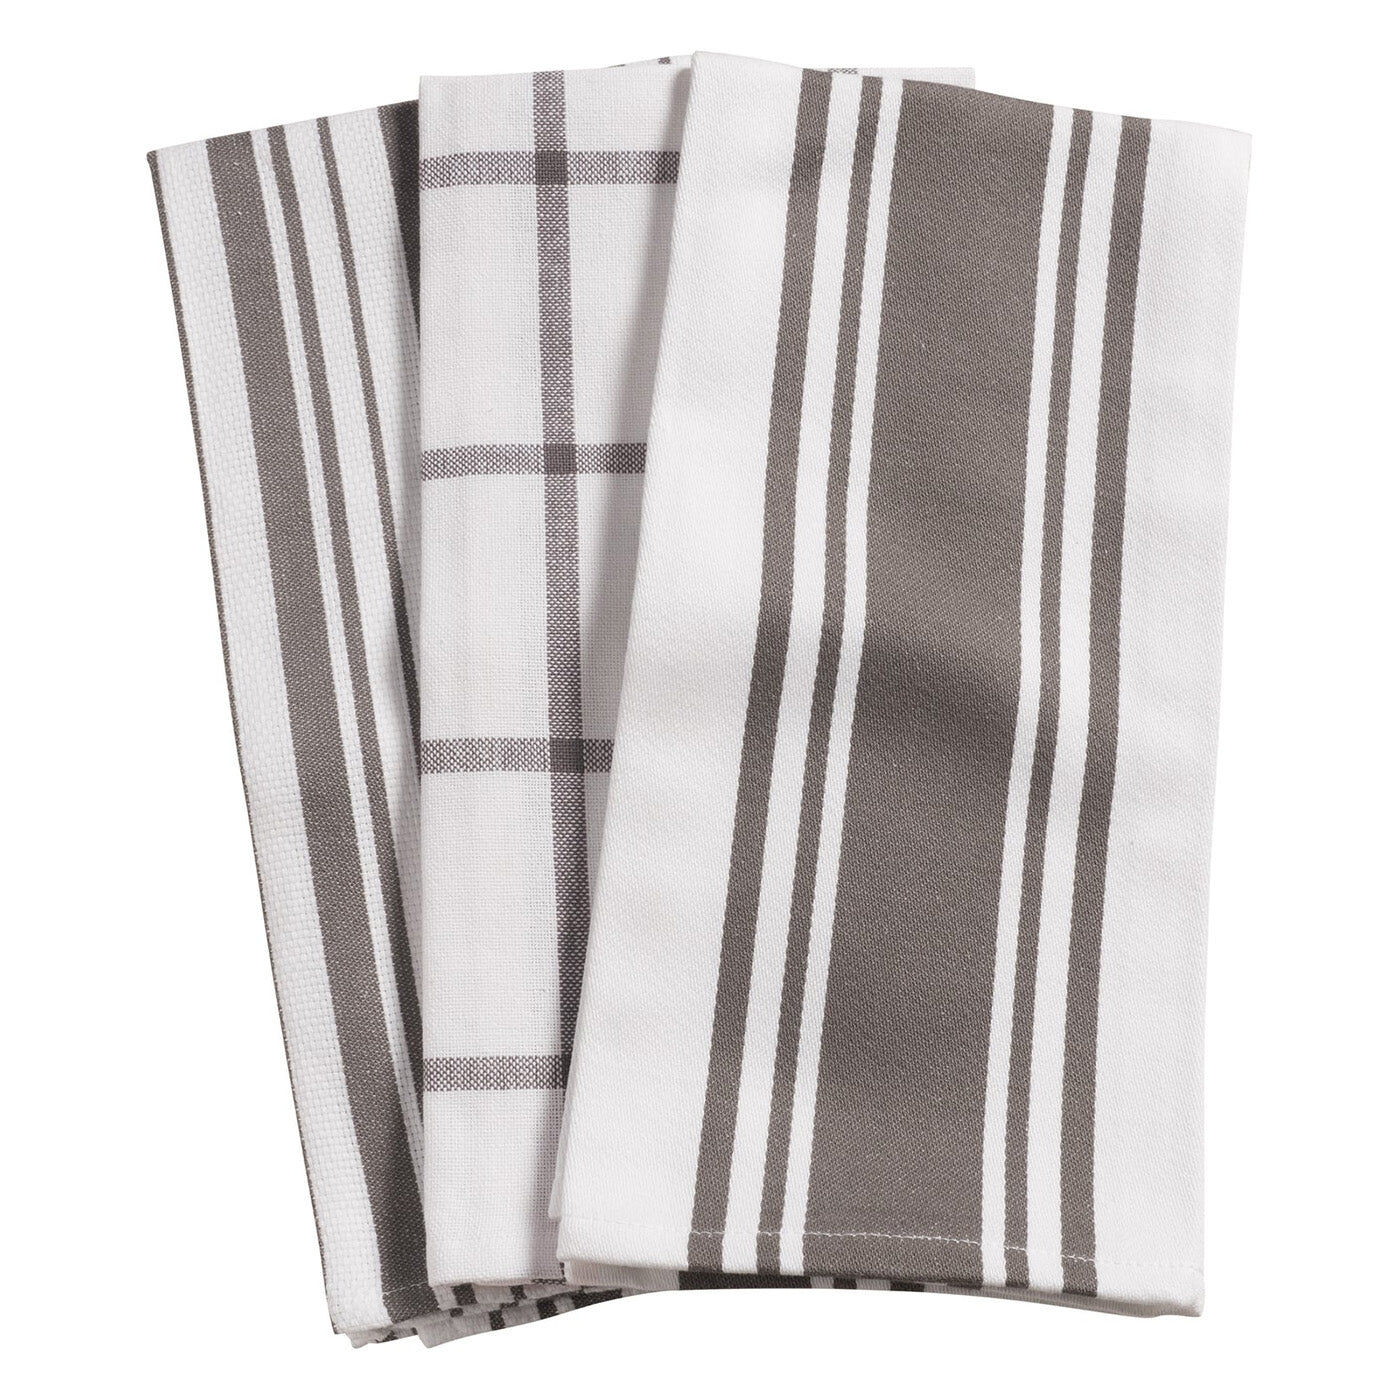 KAF Home Centerband/Basketweave/Windowpane Kitchen Towels, Set of 3